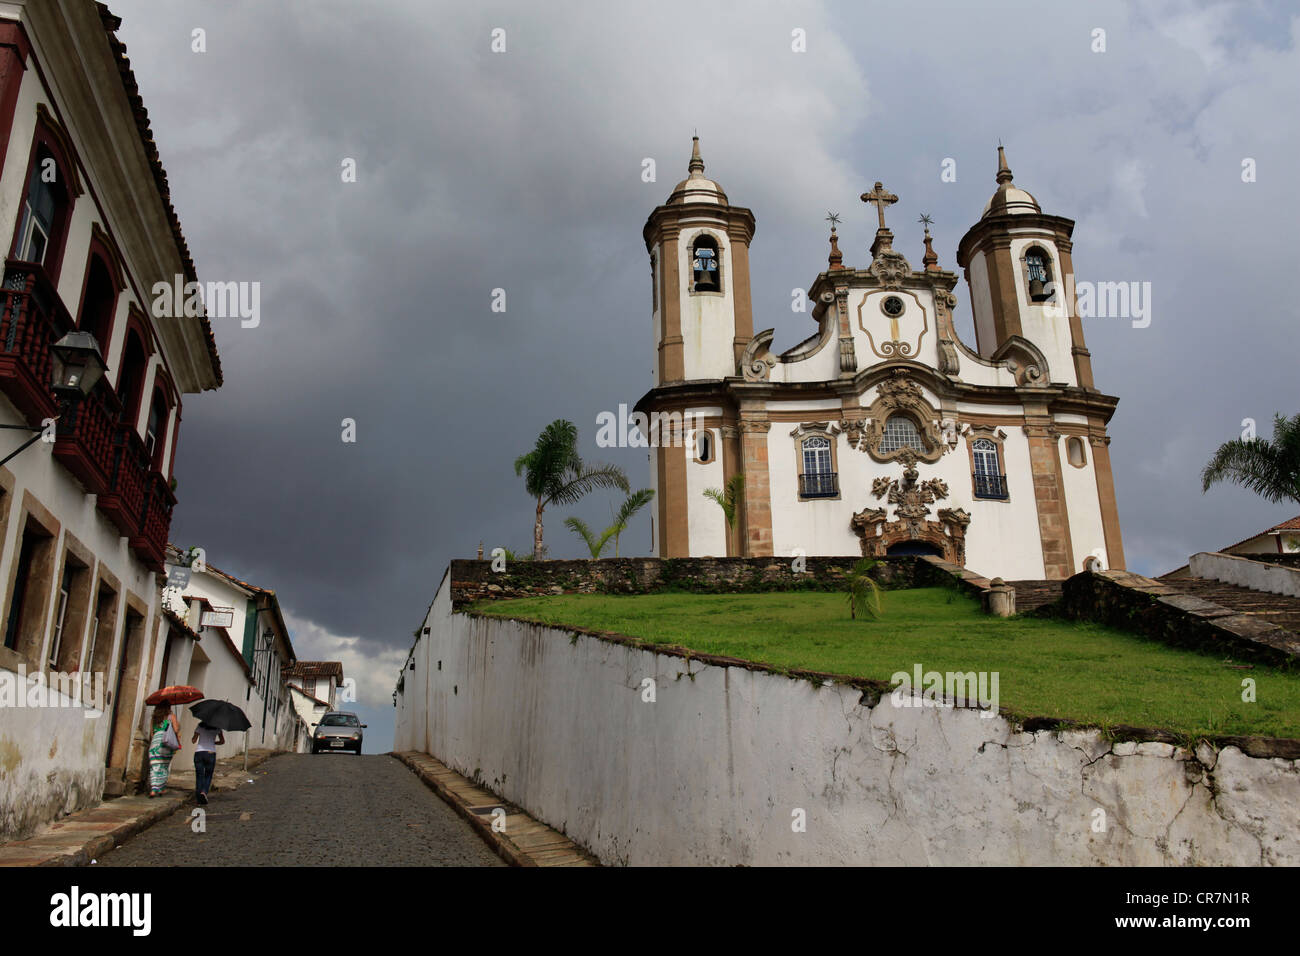 Brasil, Minas Gerais state, Ouro Preto, church facade Stock Photo